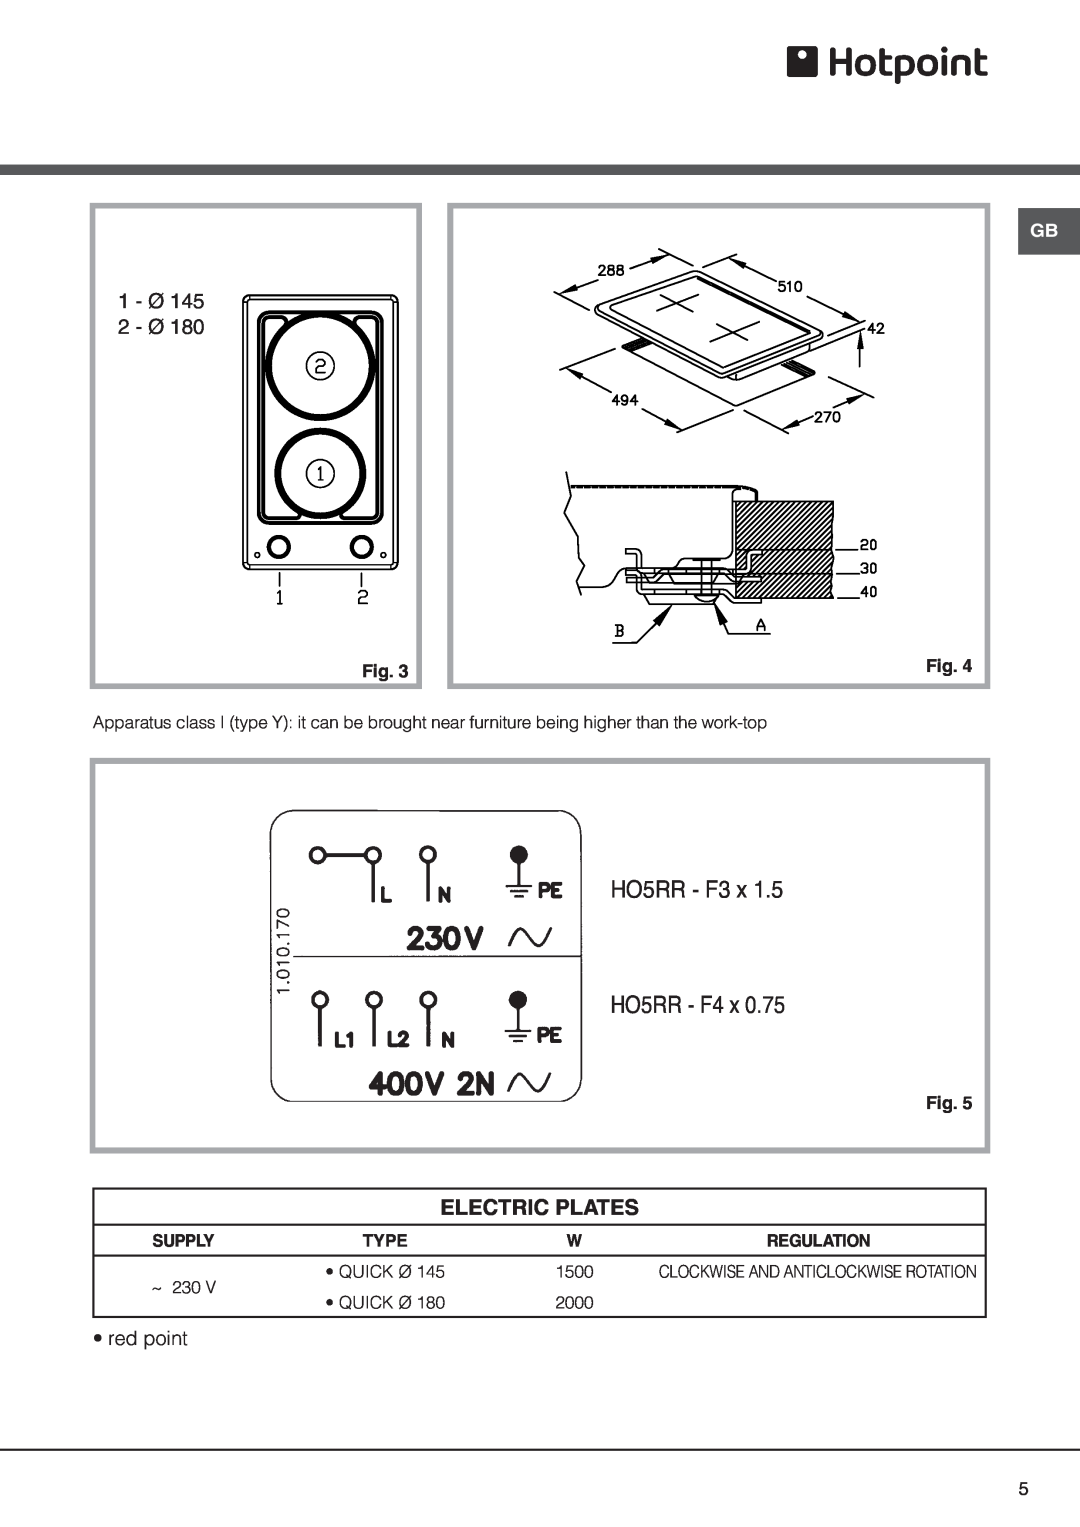 Hotpoint E320SIX manual Electric Plates, HO5RR - F3 x HO5RR - F4, 1 - Ø, 2 - Ø, Supply, Type, Regulation 